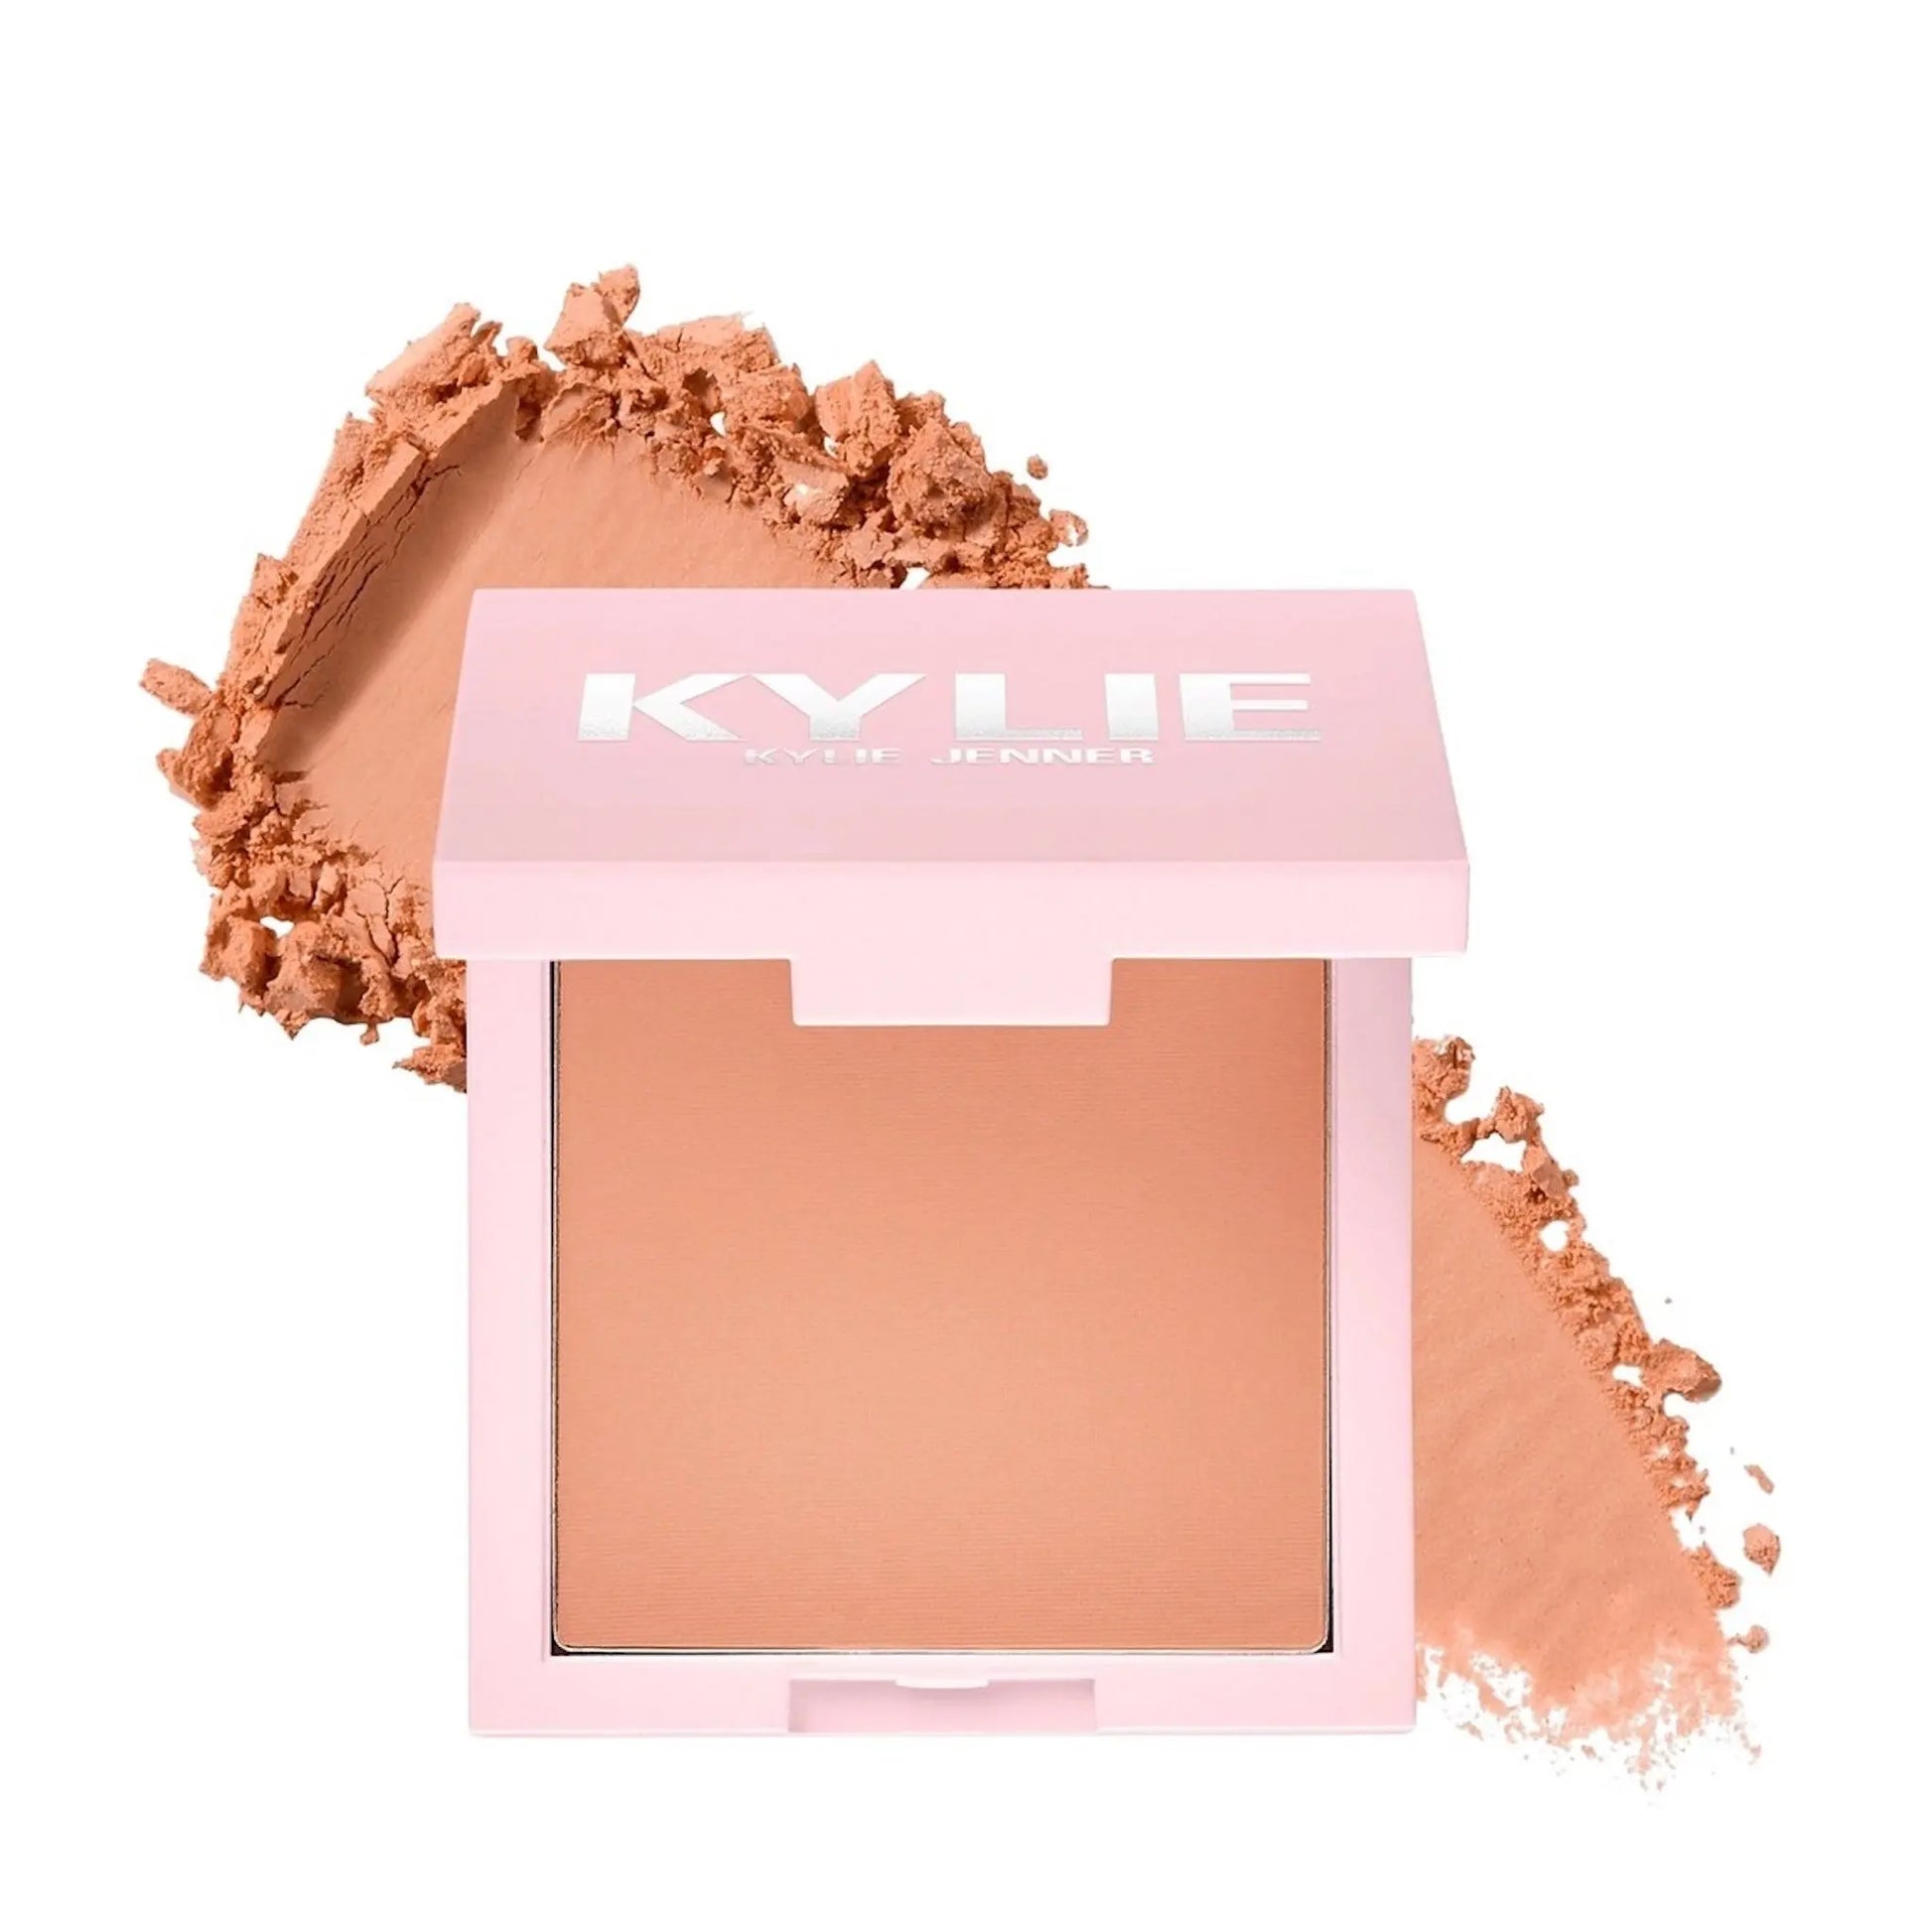 KYLIE COSMETICS CLOSE TO PERFECT PRESSED BLUSH POWDER Kylie Cosmetics